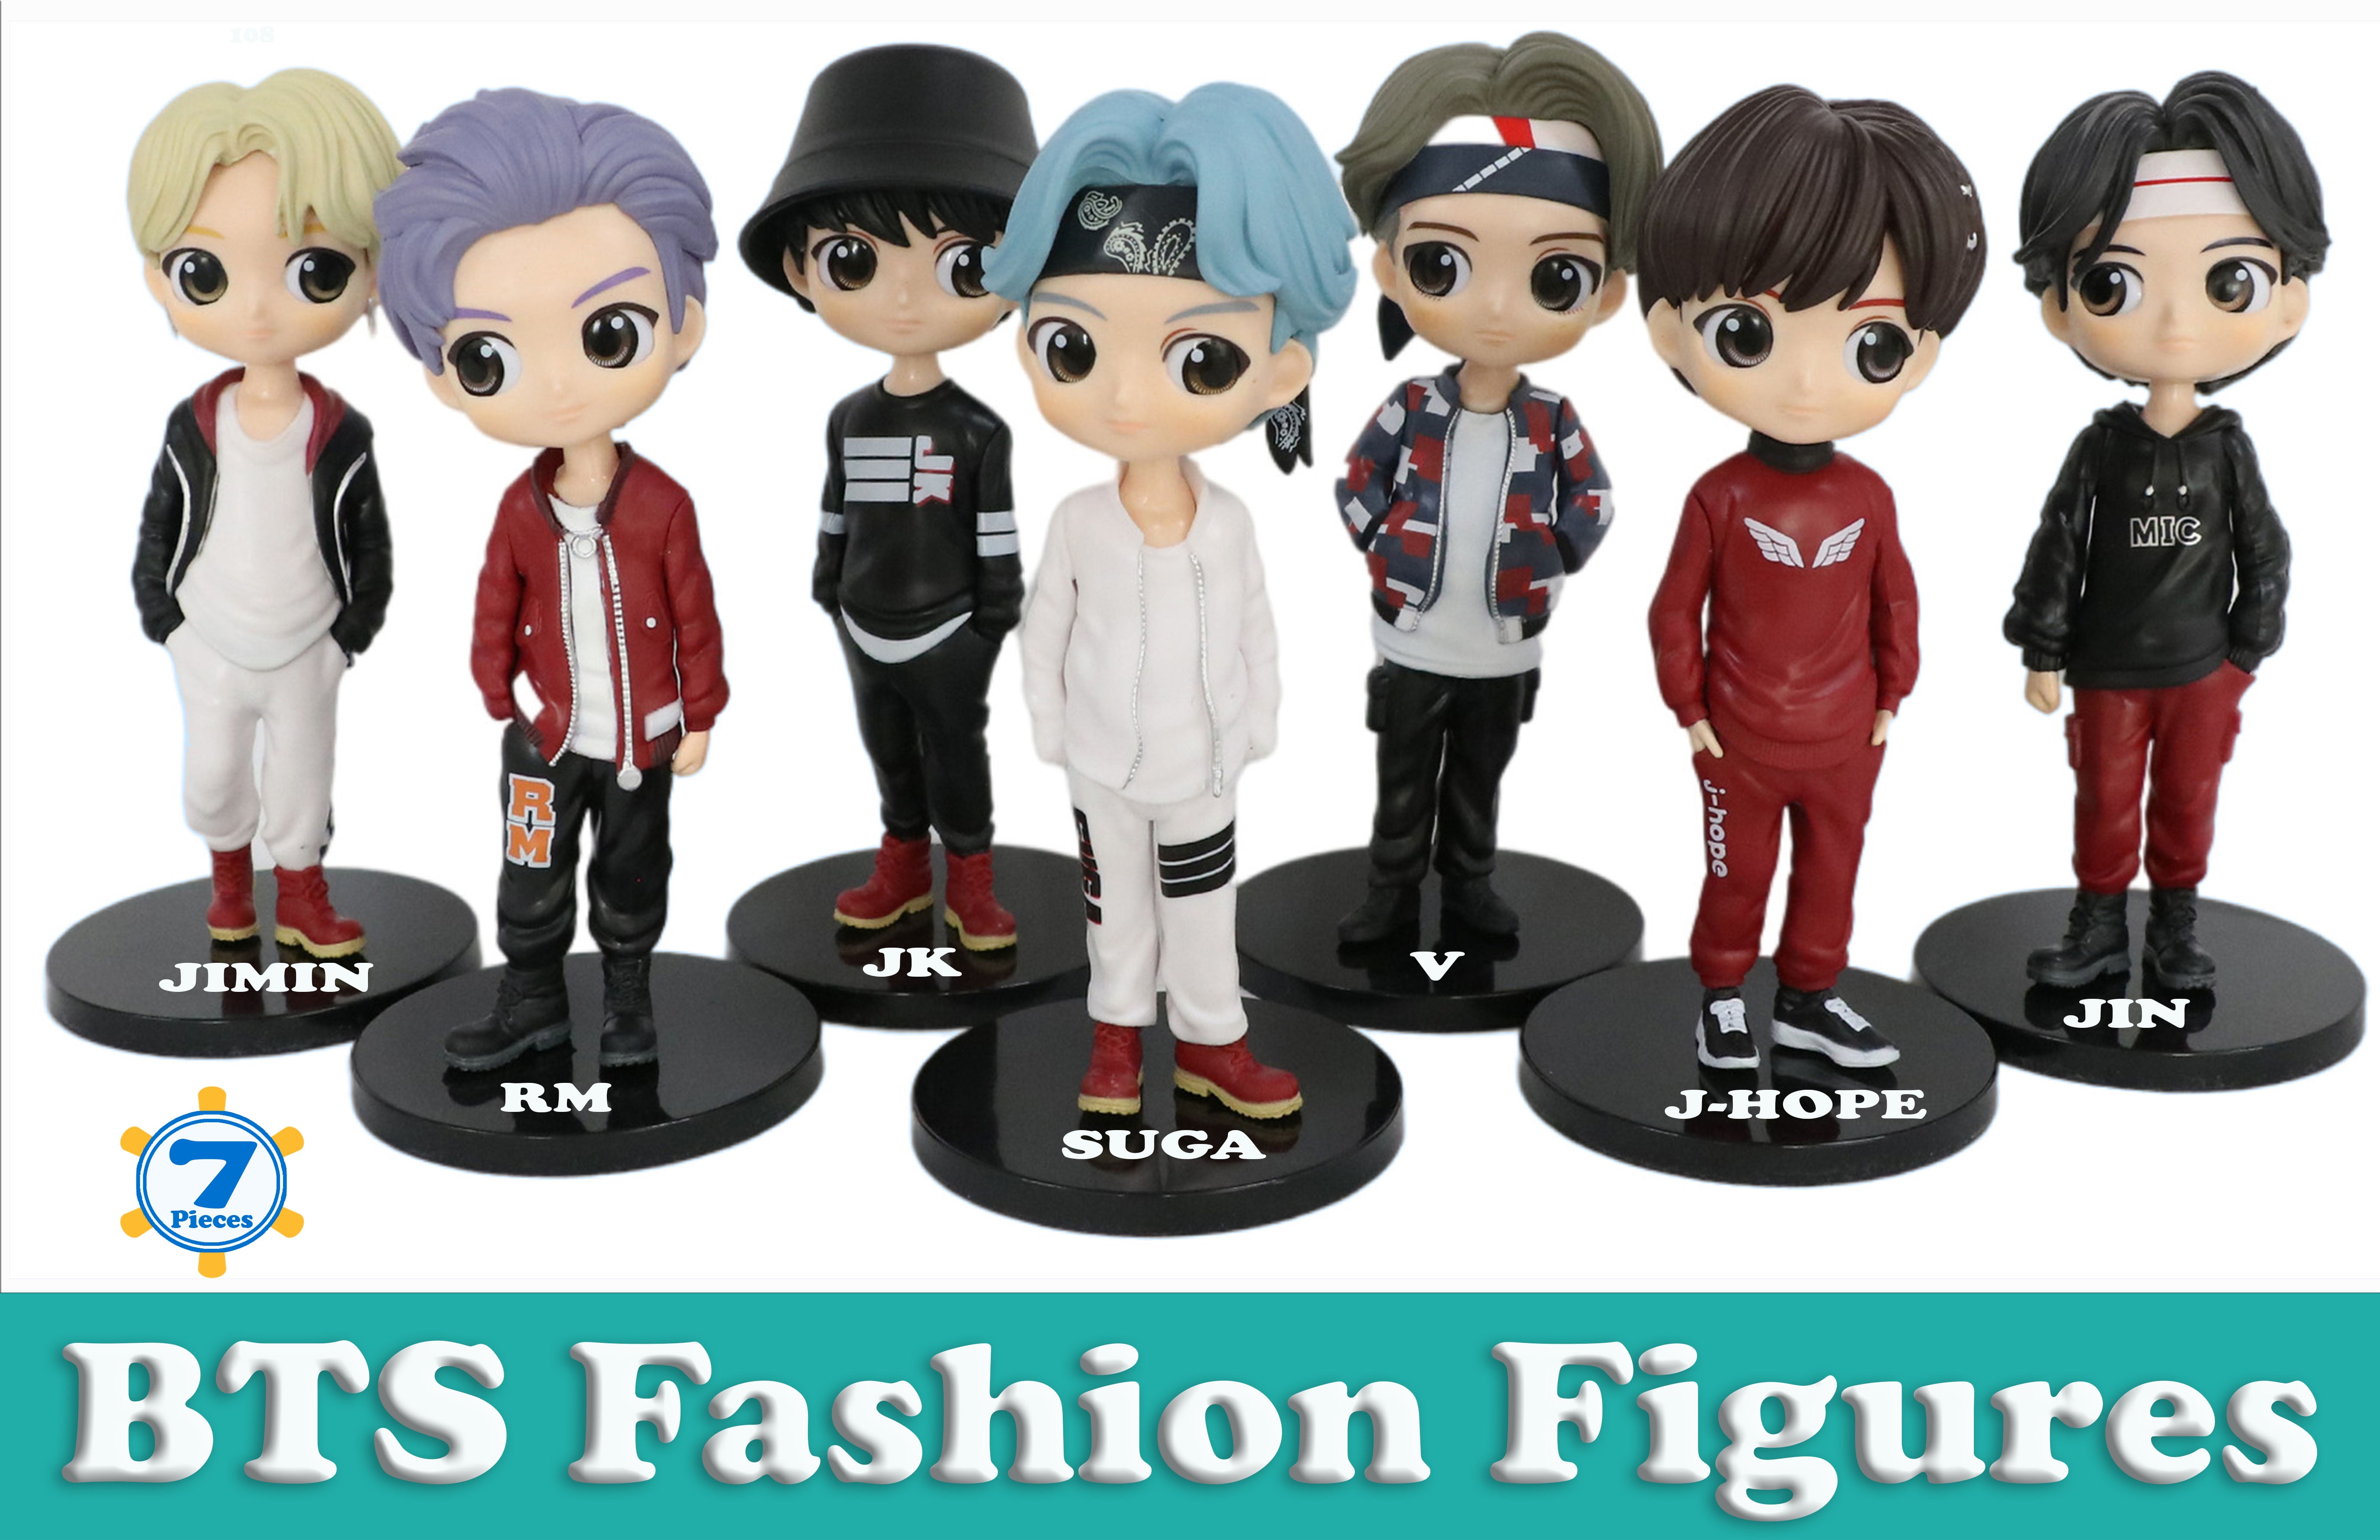 7 Pcs / Set KPOP BTS Bangtan Boys 6-inch Fashion Figures in OPP